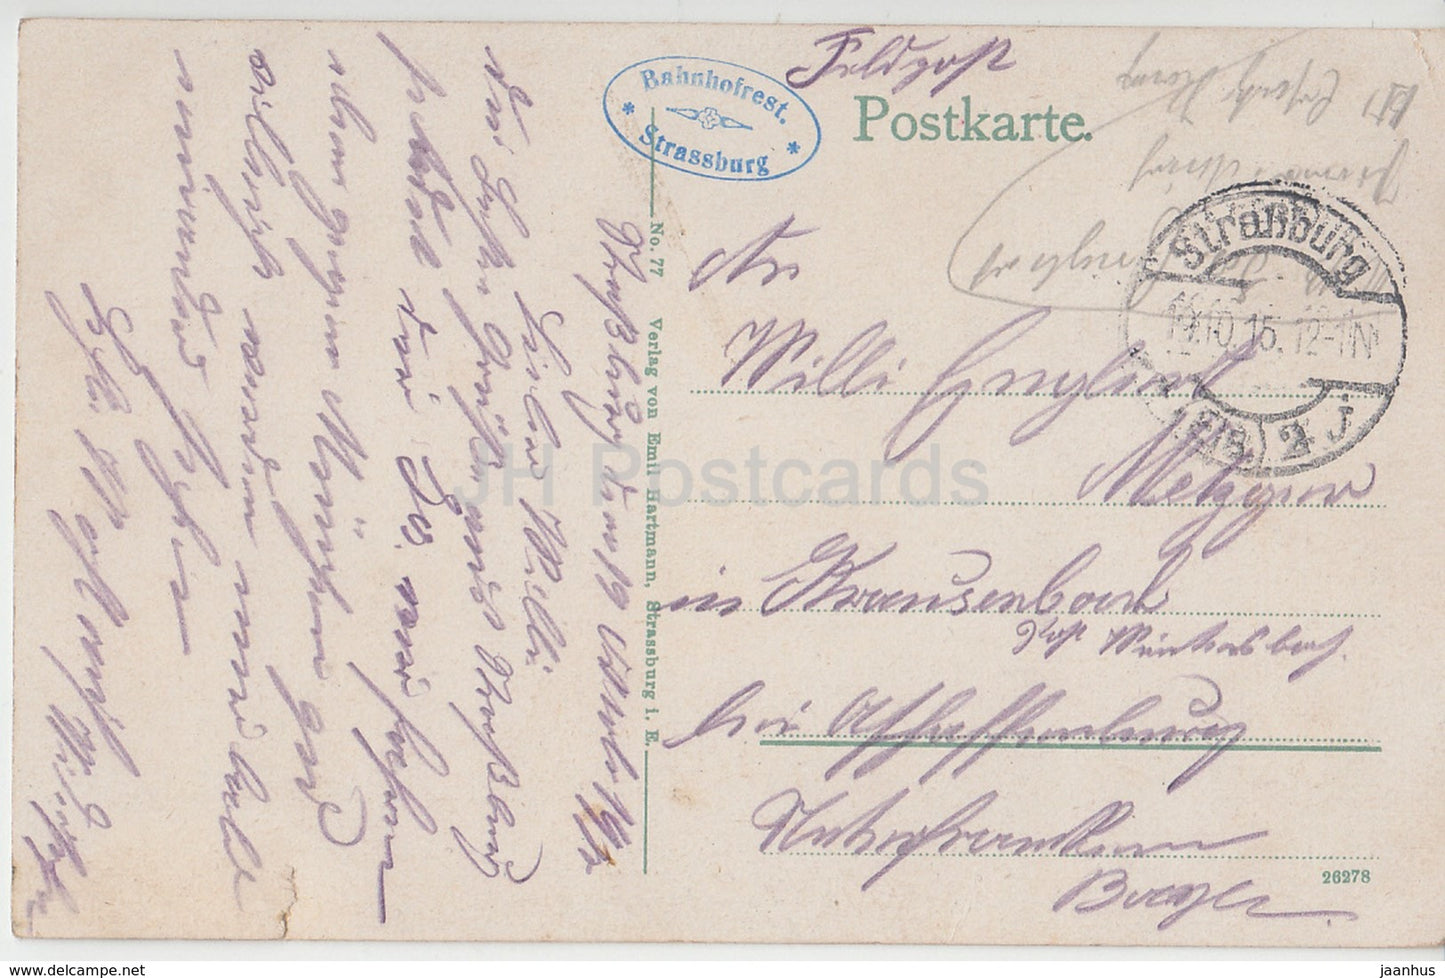 Strassburg - Das Münster - cathedral - Feldpost - Bahnhofrest. - 77 - 1912 - old postcard - France - used